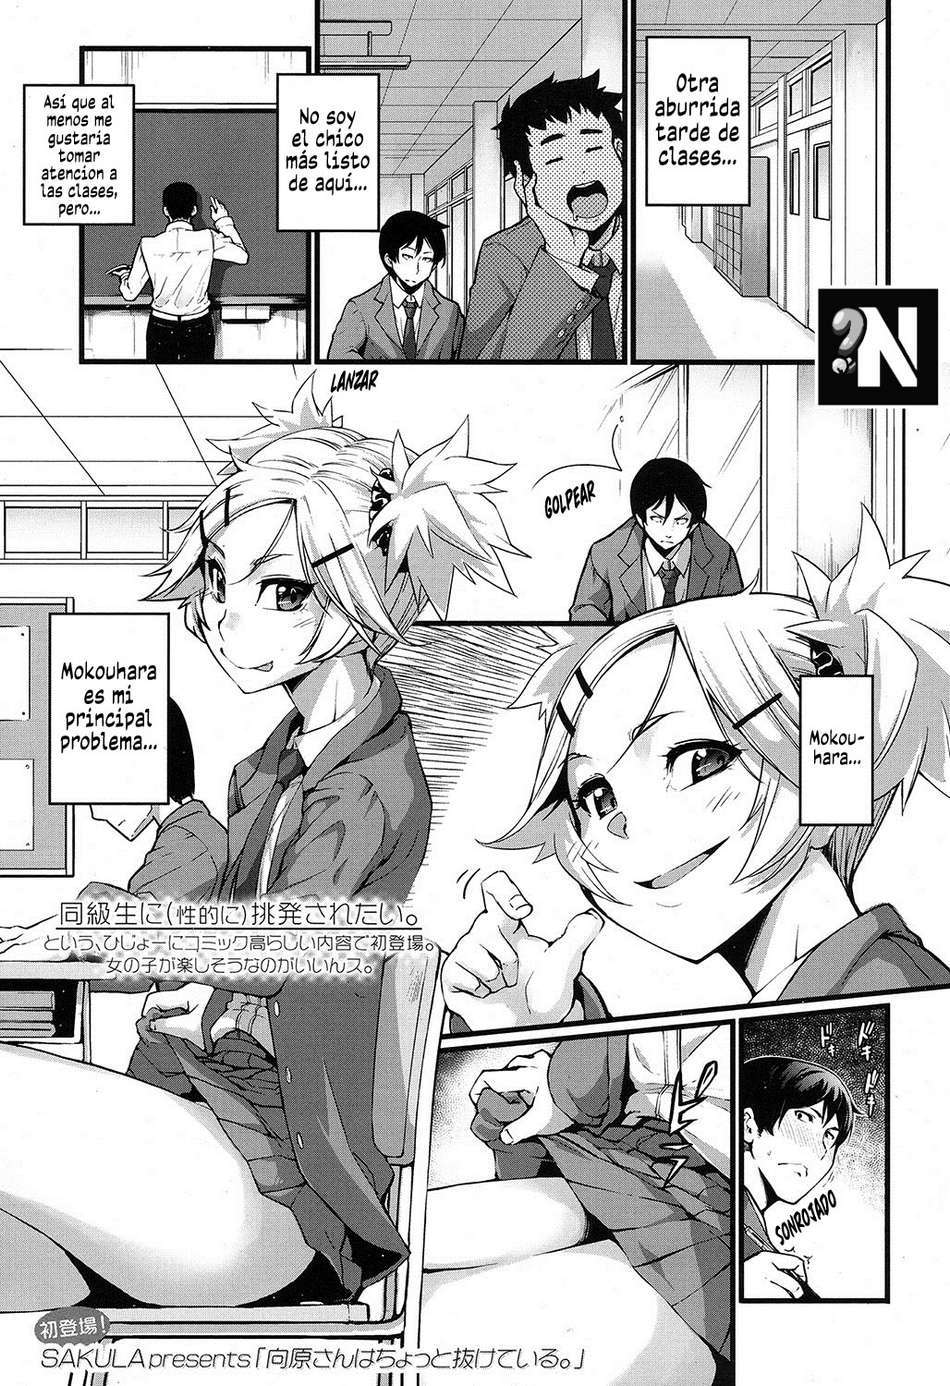 Mukouhara-san me Distrae un Poco - Page #1